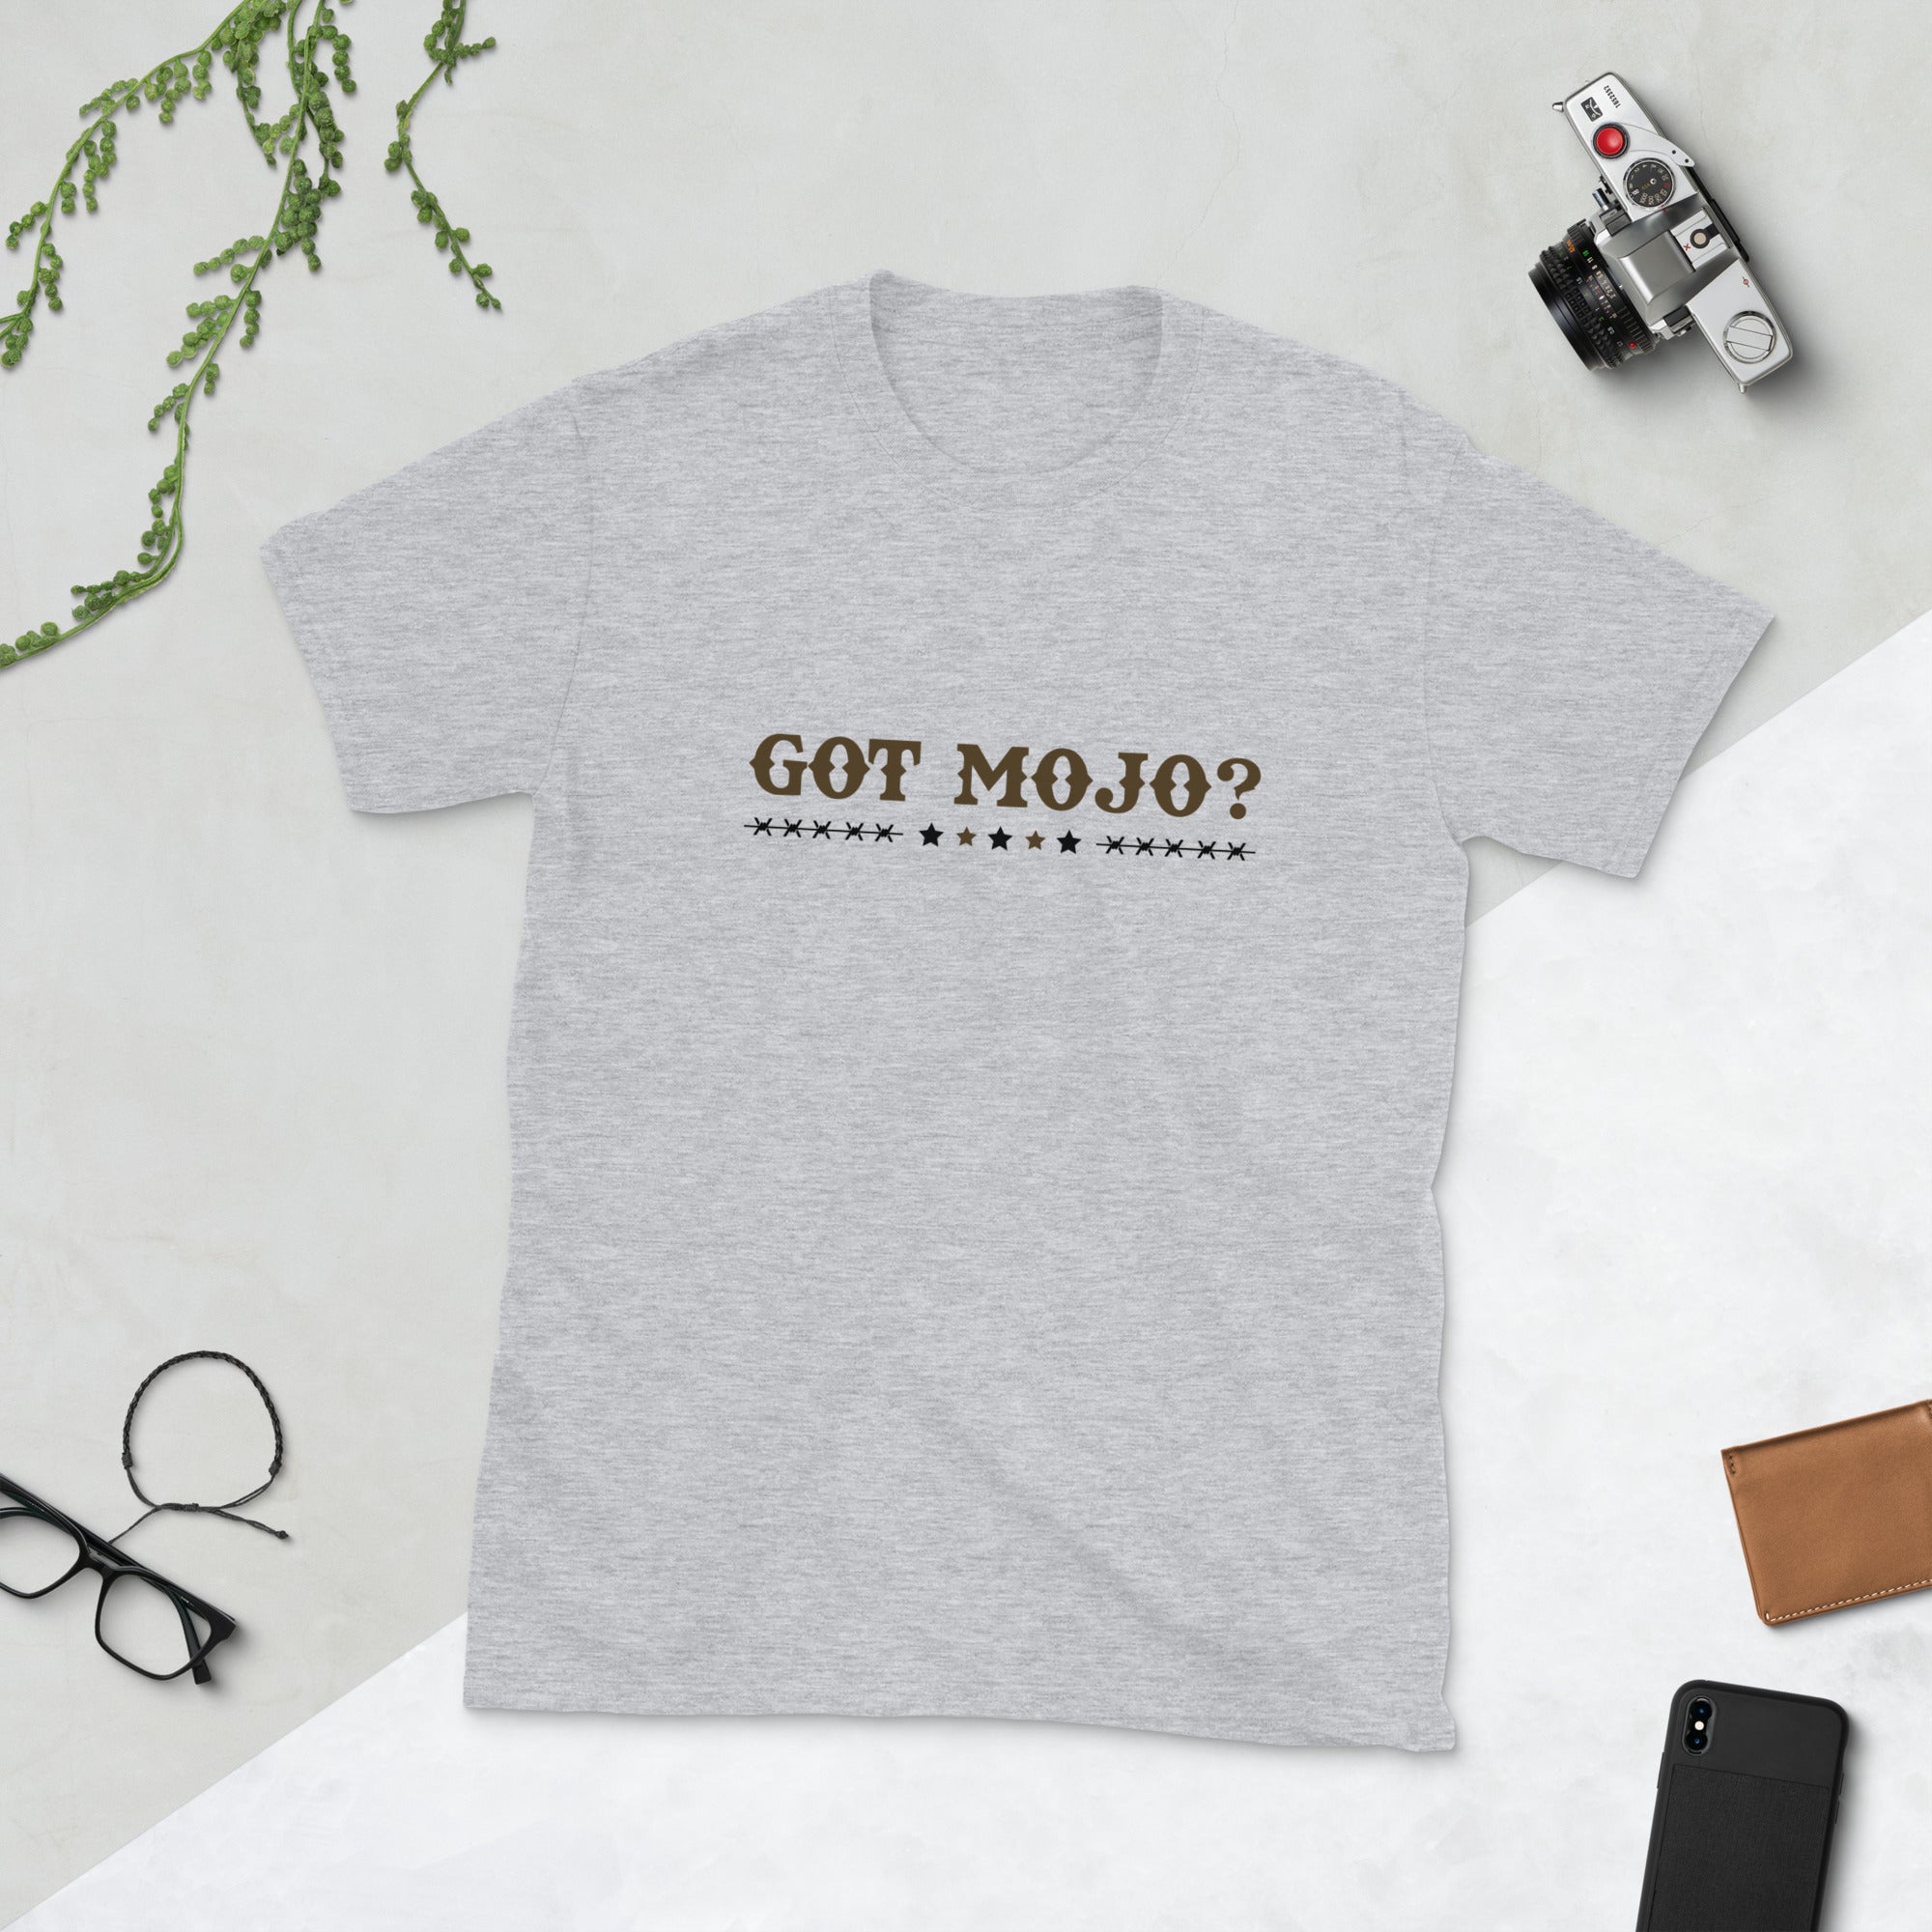 Mojo Brothers Short-Sleeve Men T-Shirt